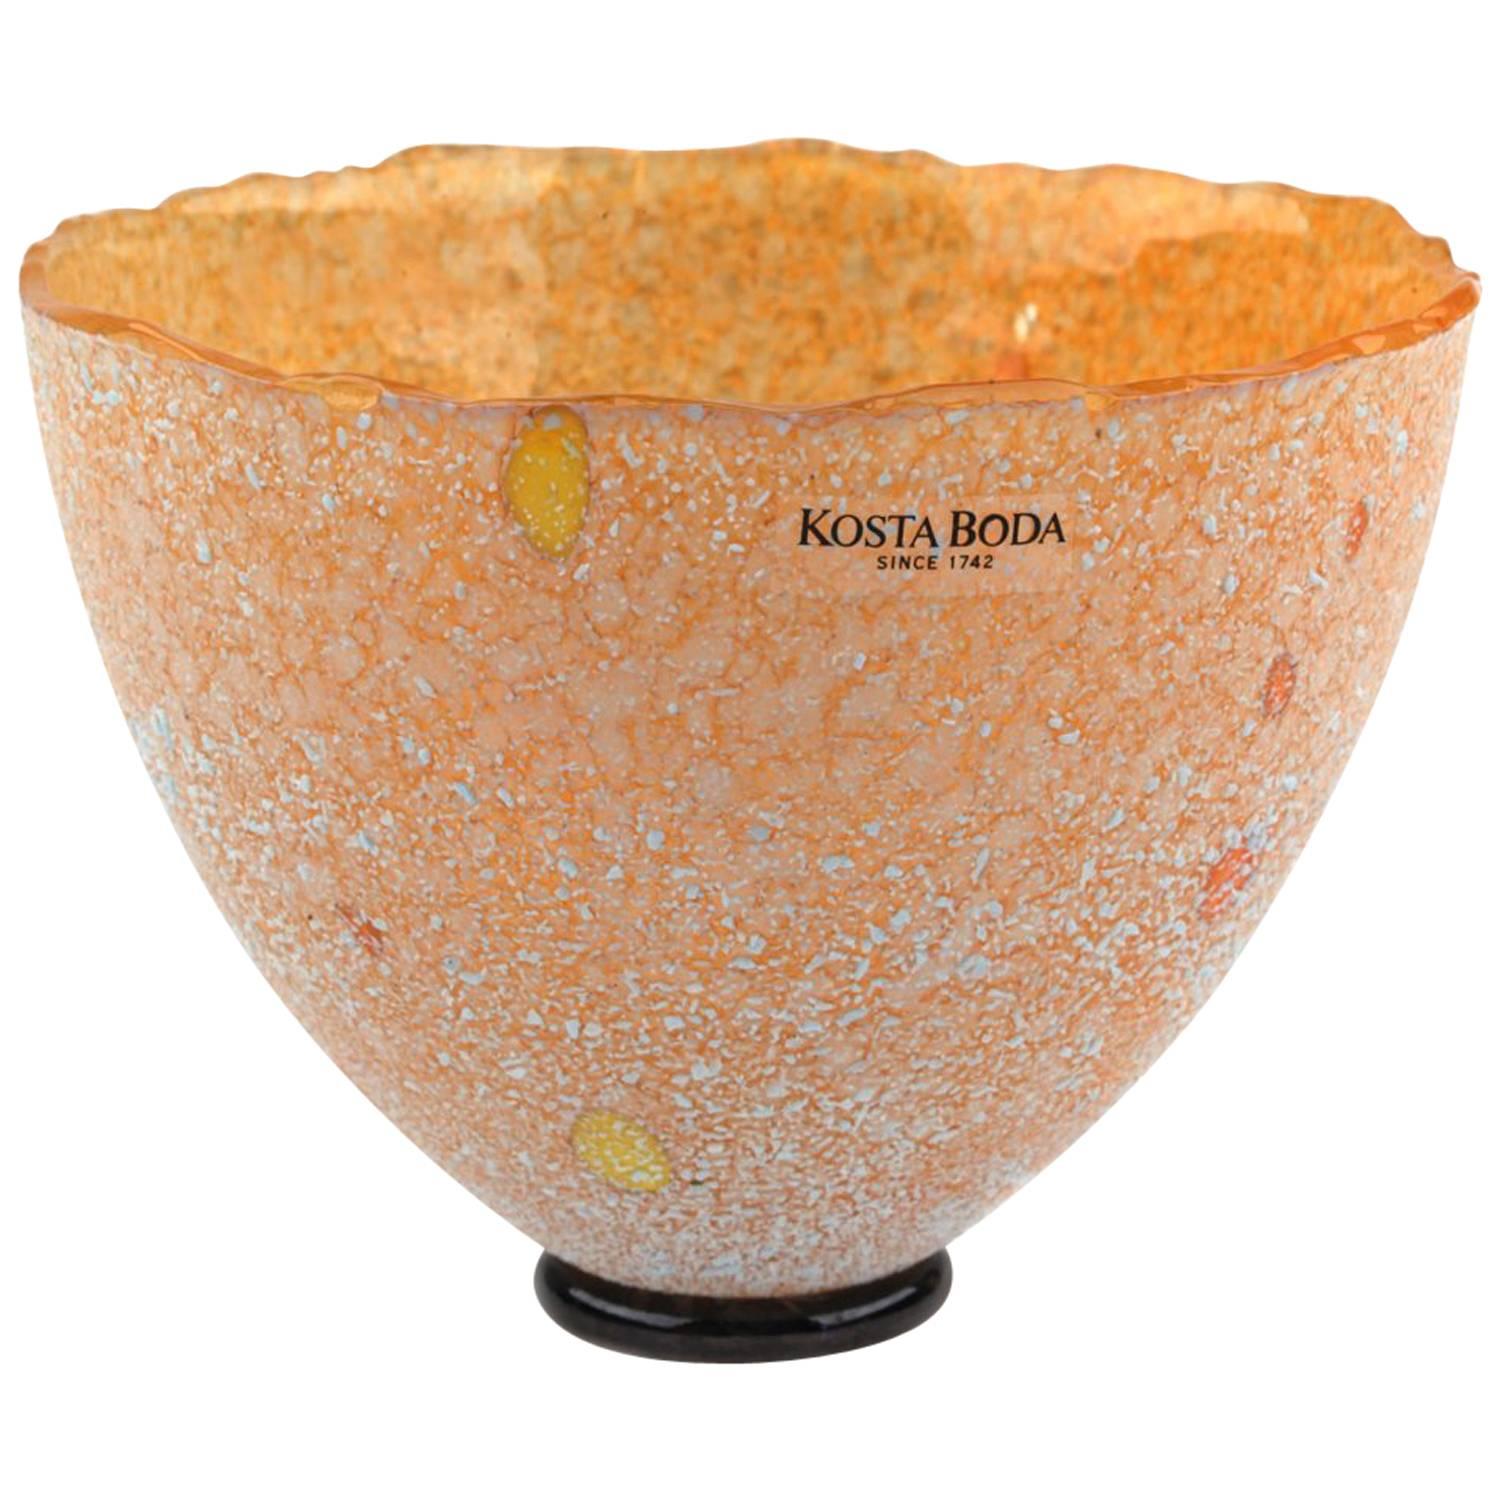 Kosta Boda Bertil Vallien Signed Artist Collection Galaxy Glass Petite Vase For Sale